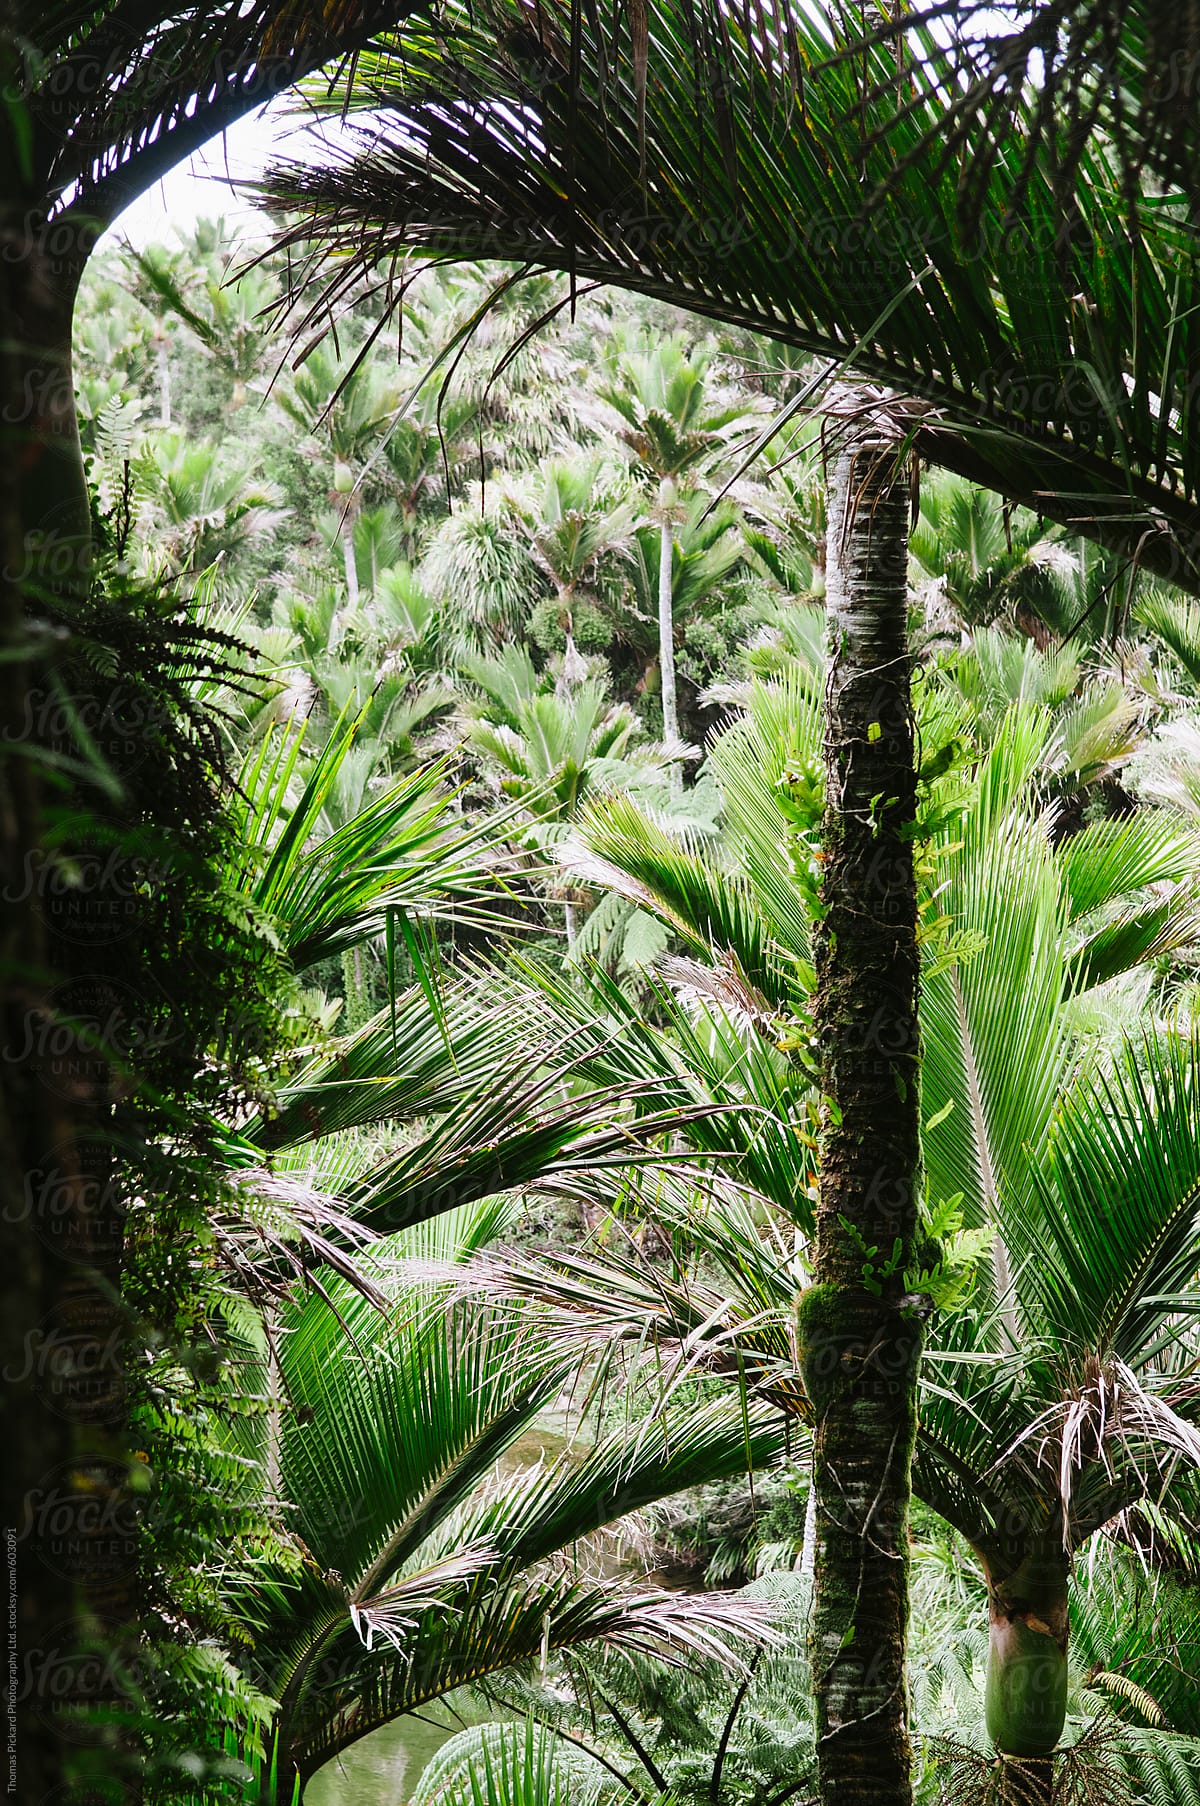 NIkau Palm, Golden Bay, New Zealand.